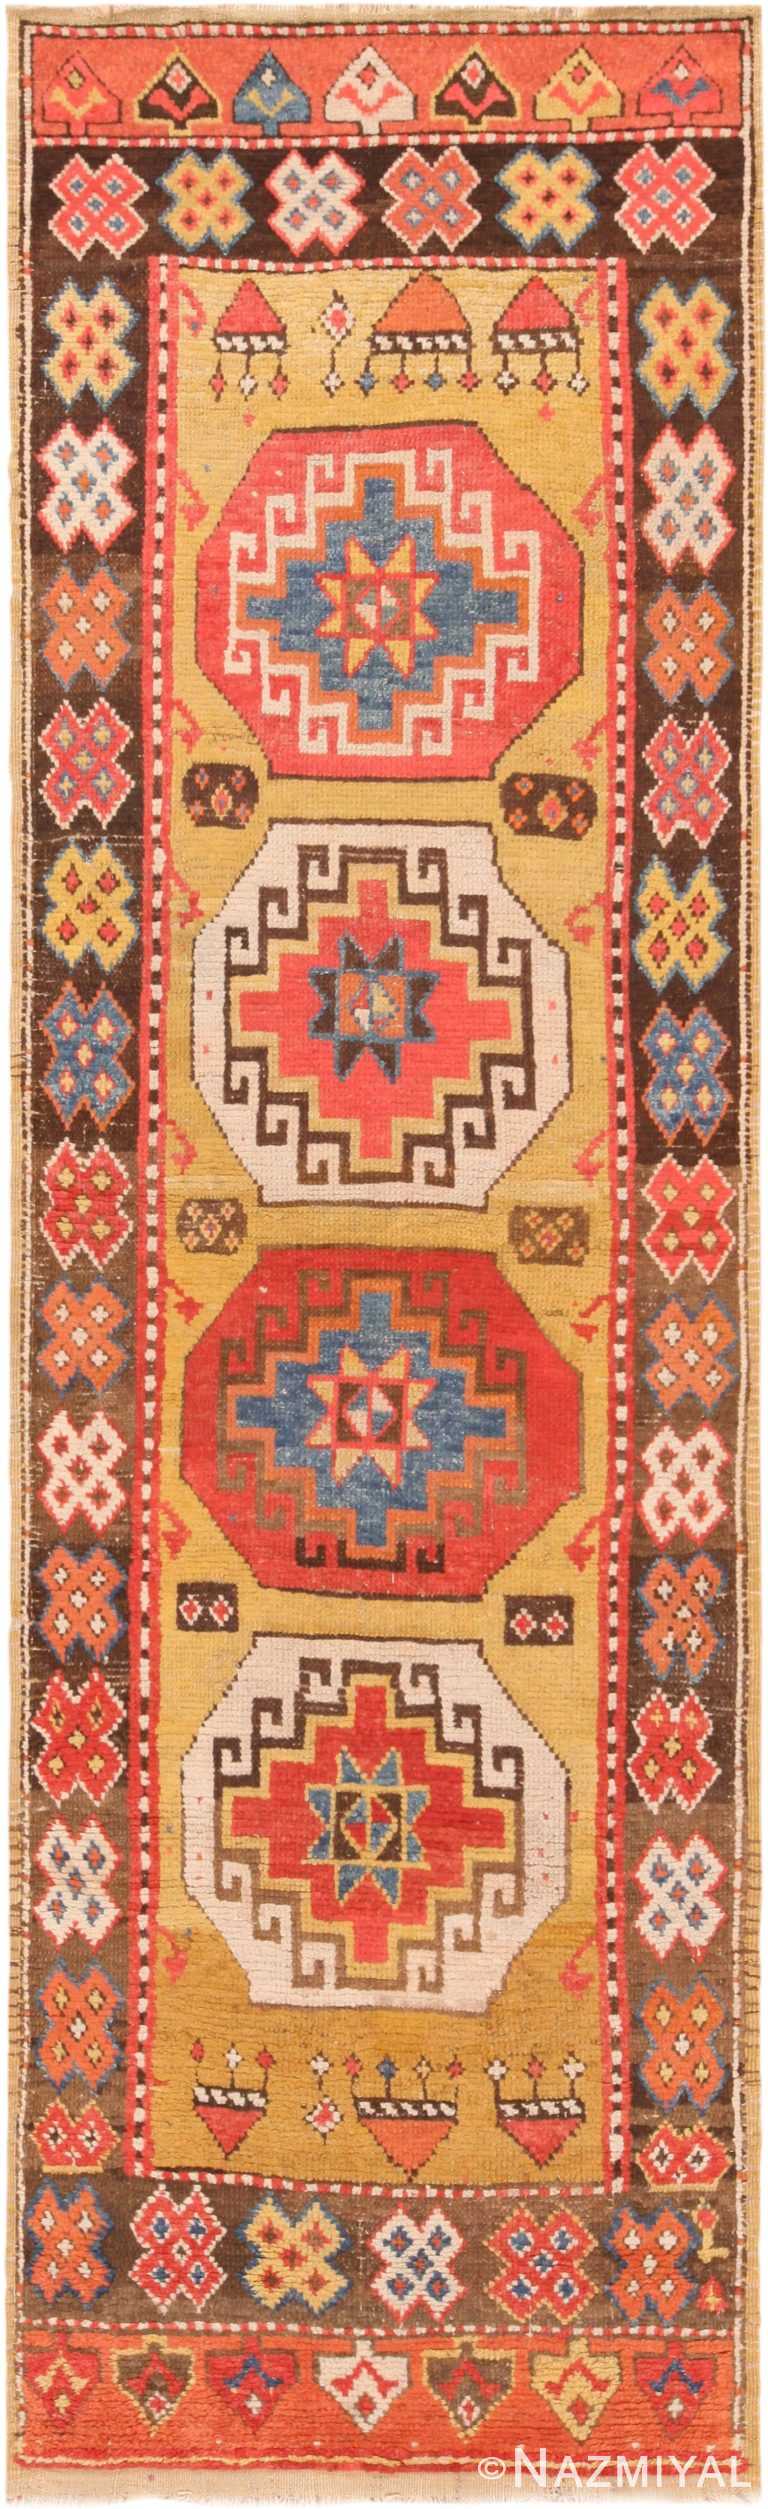 Superb Antique Turkish Konya Runner 71184 by Nazmiyal Antique Rugs